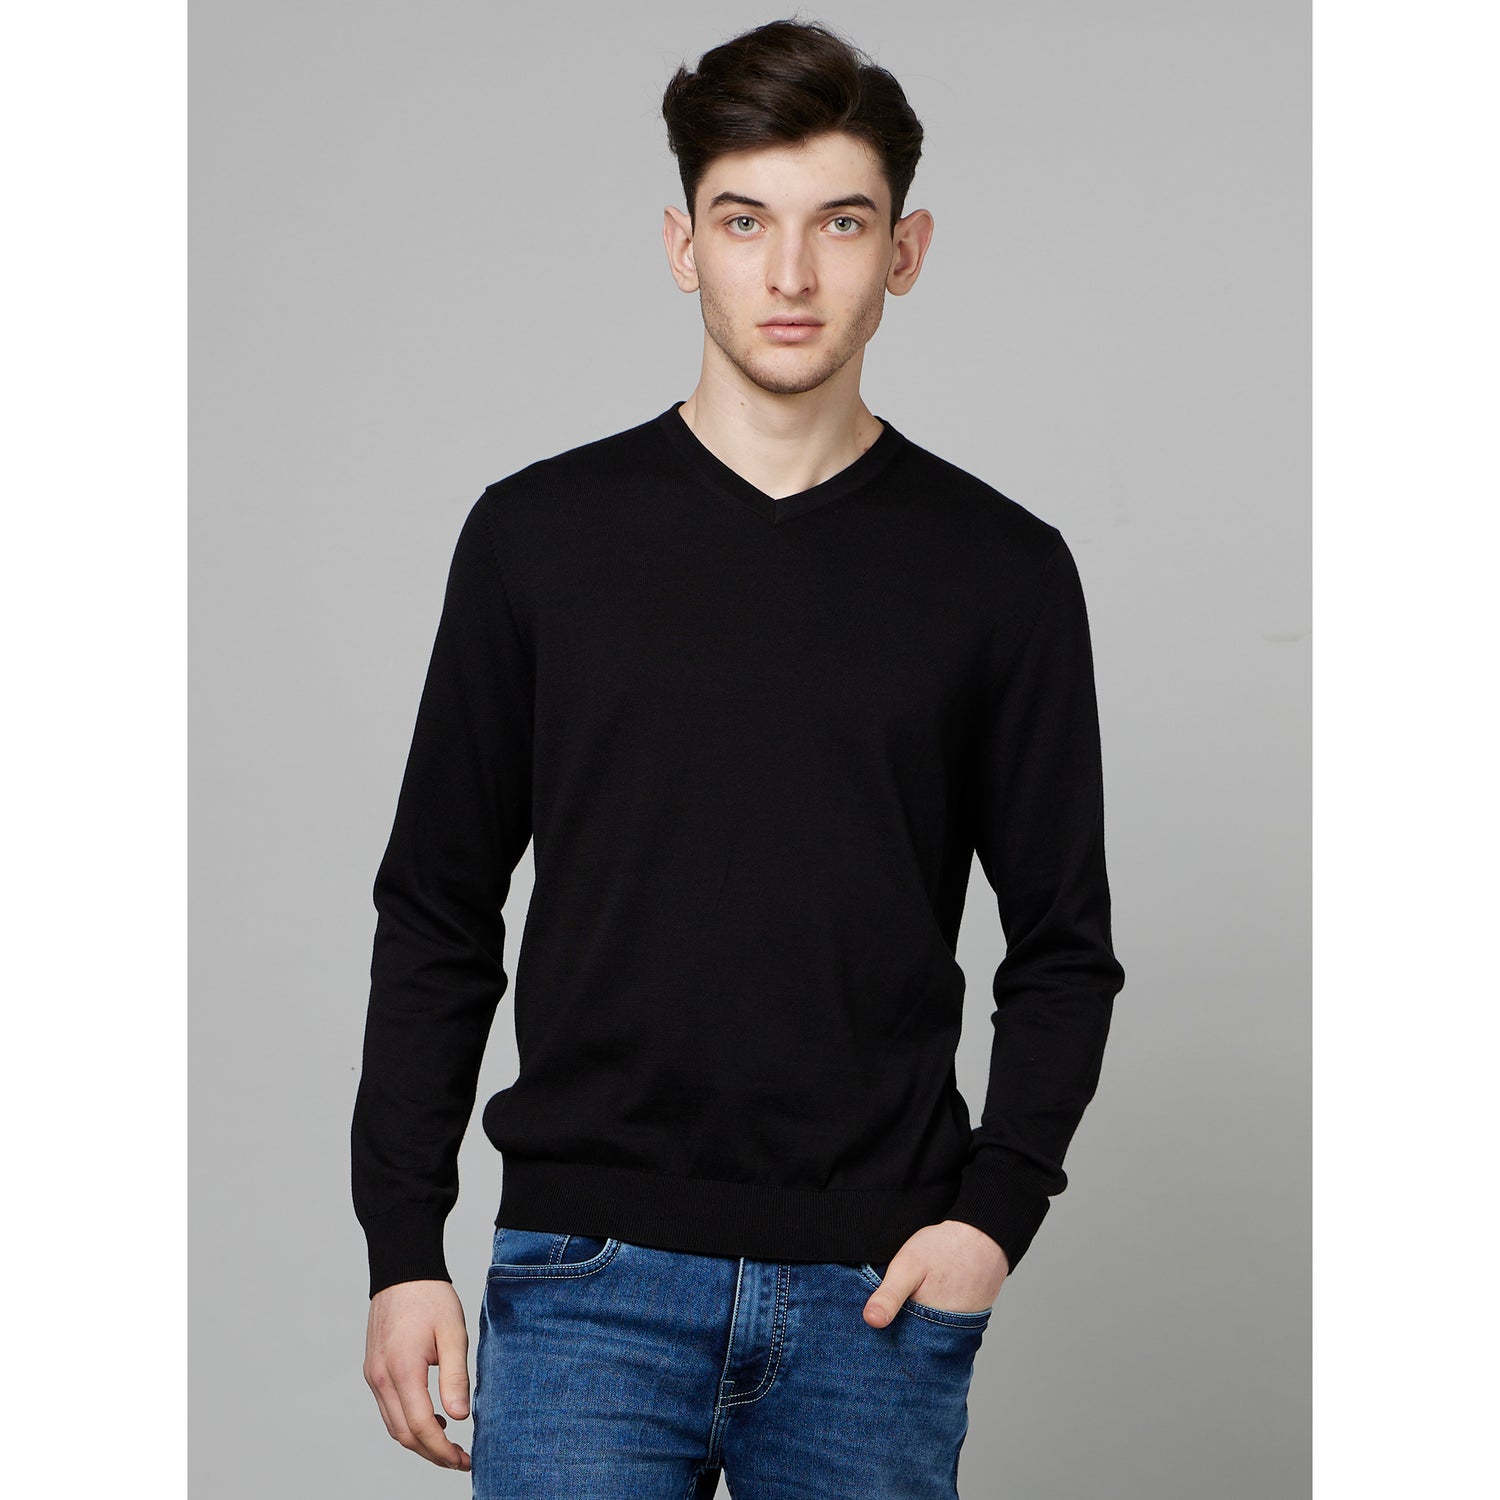 Black V-Neck Long Sleeves Cotton Sweatshirt (DECOTONVIN)